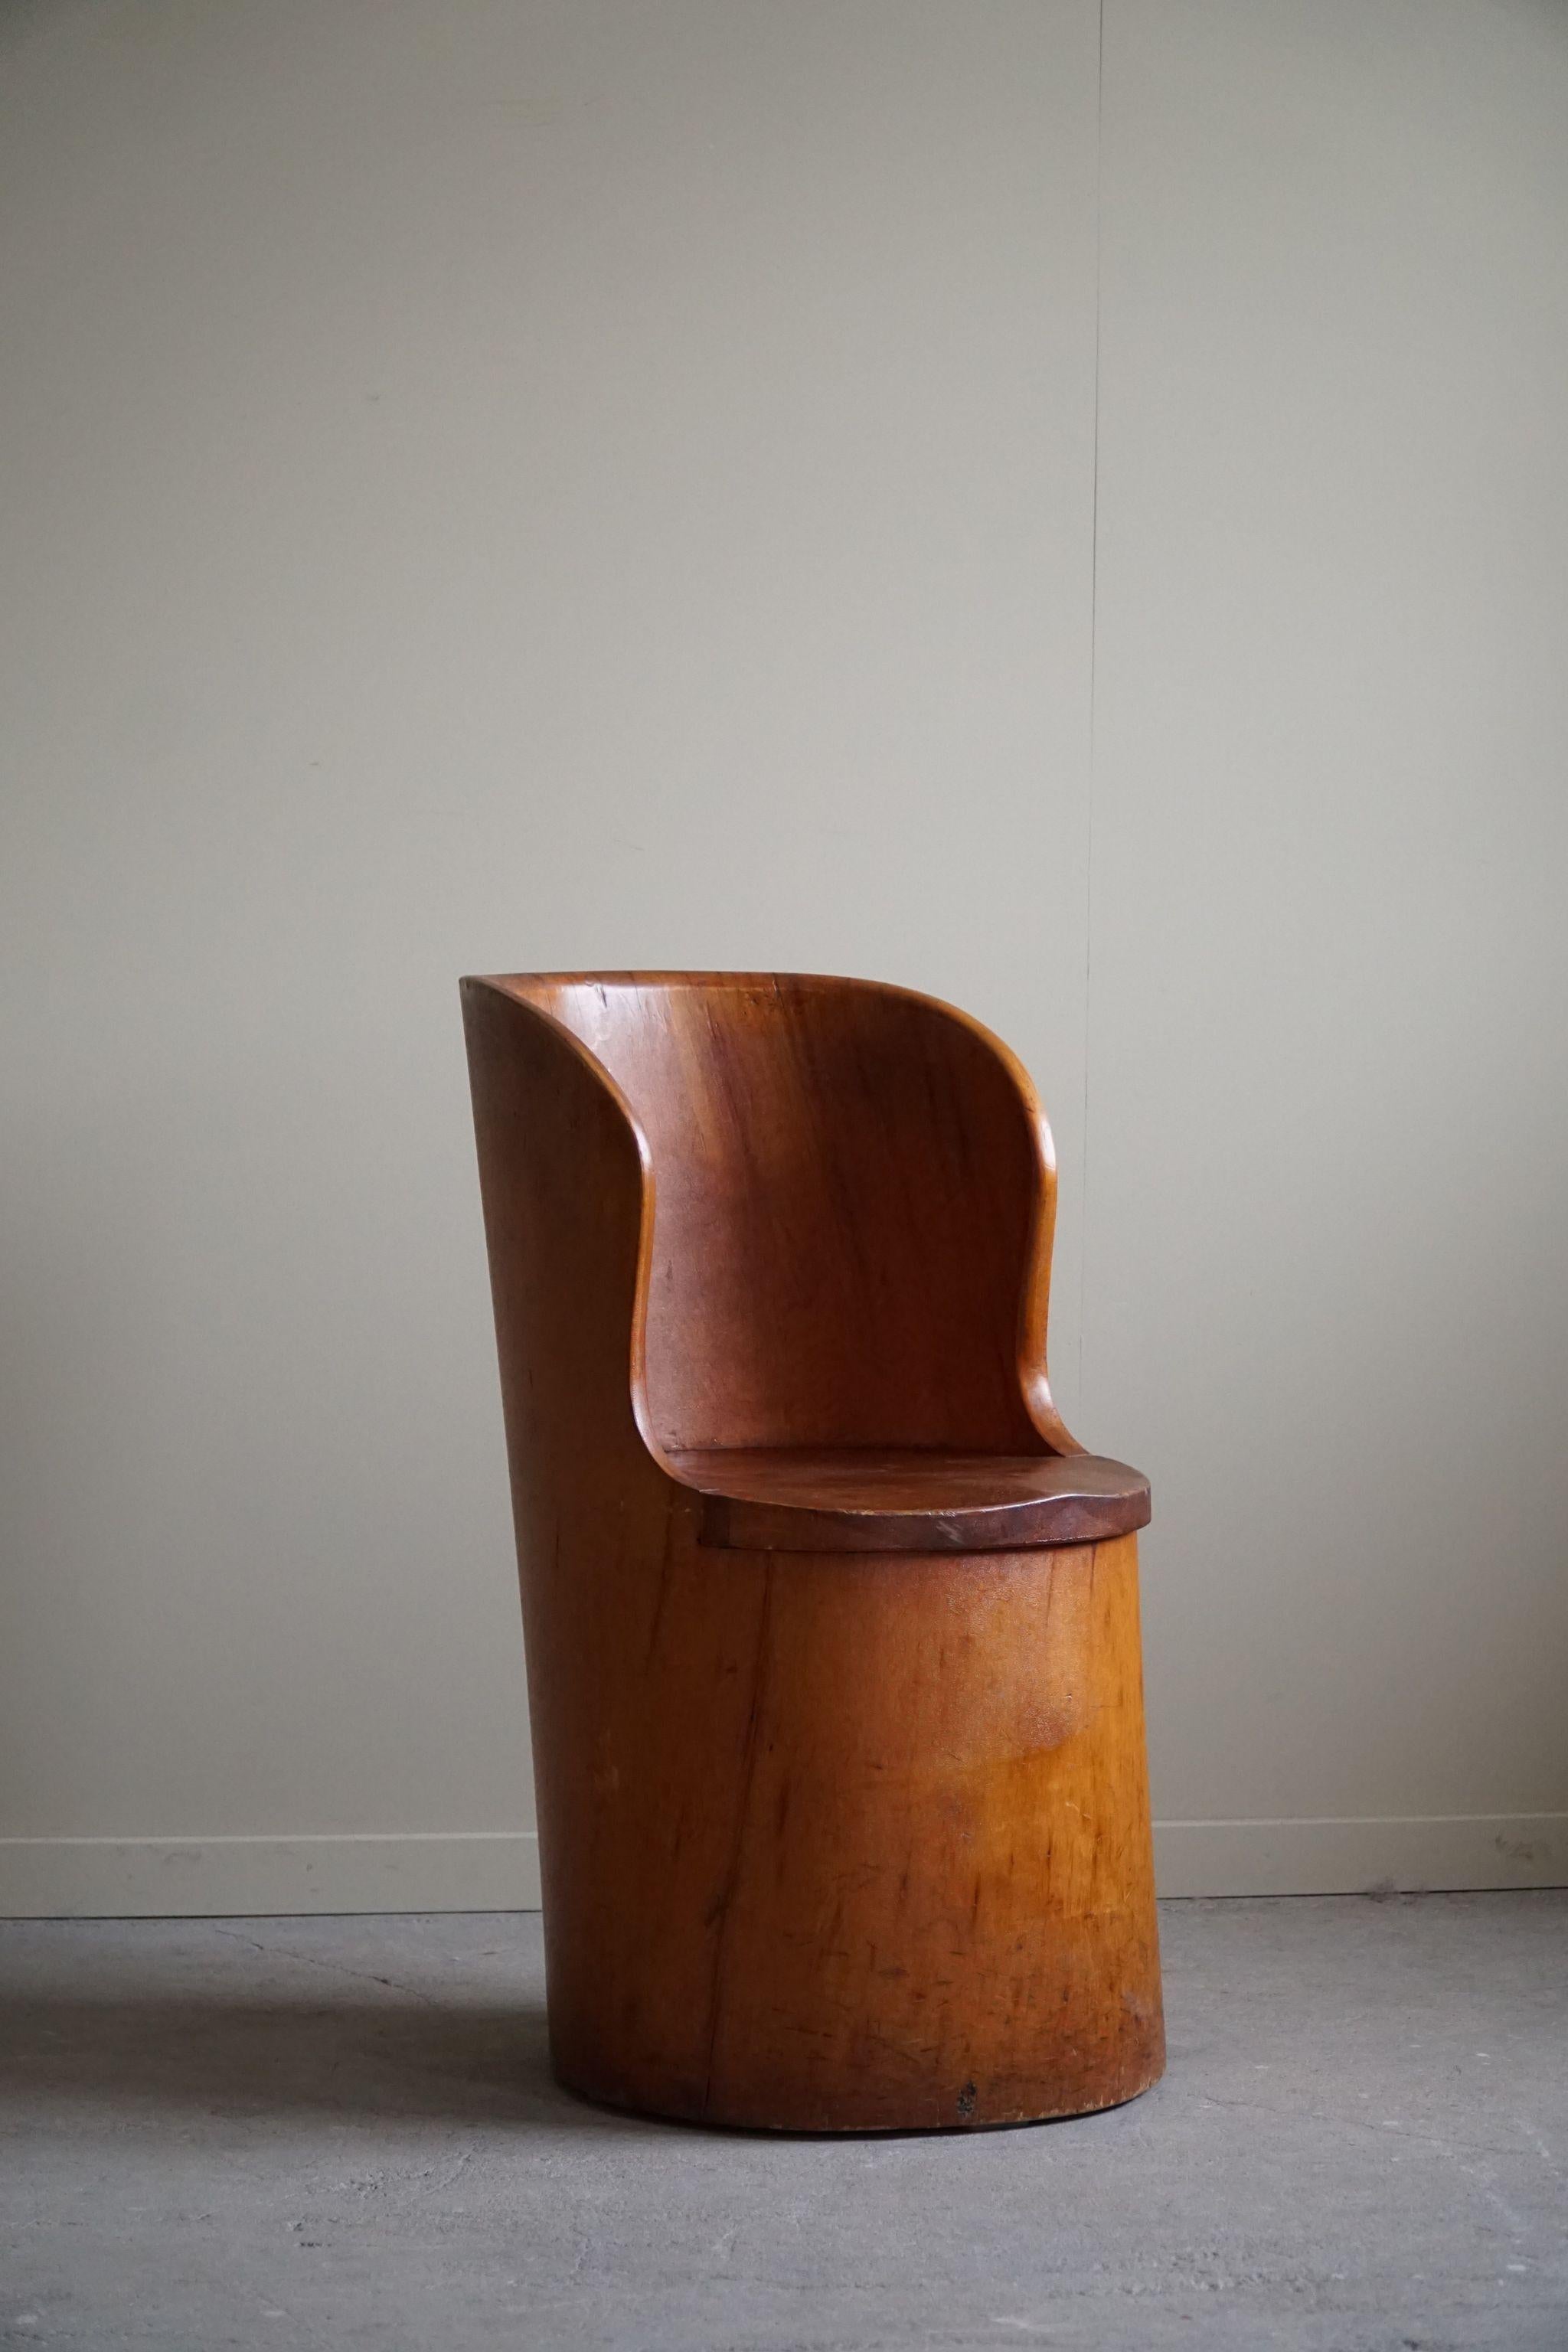  Hand Carved Primitive Stump Chair in Pine, Swedish Modern, Wabi Sabi, 1960s For Sale 9